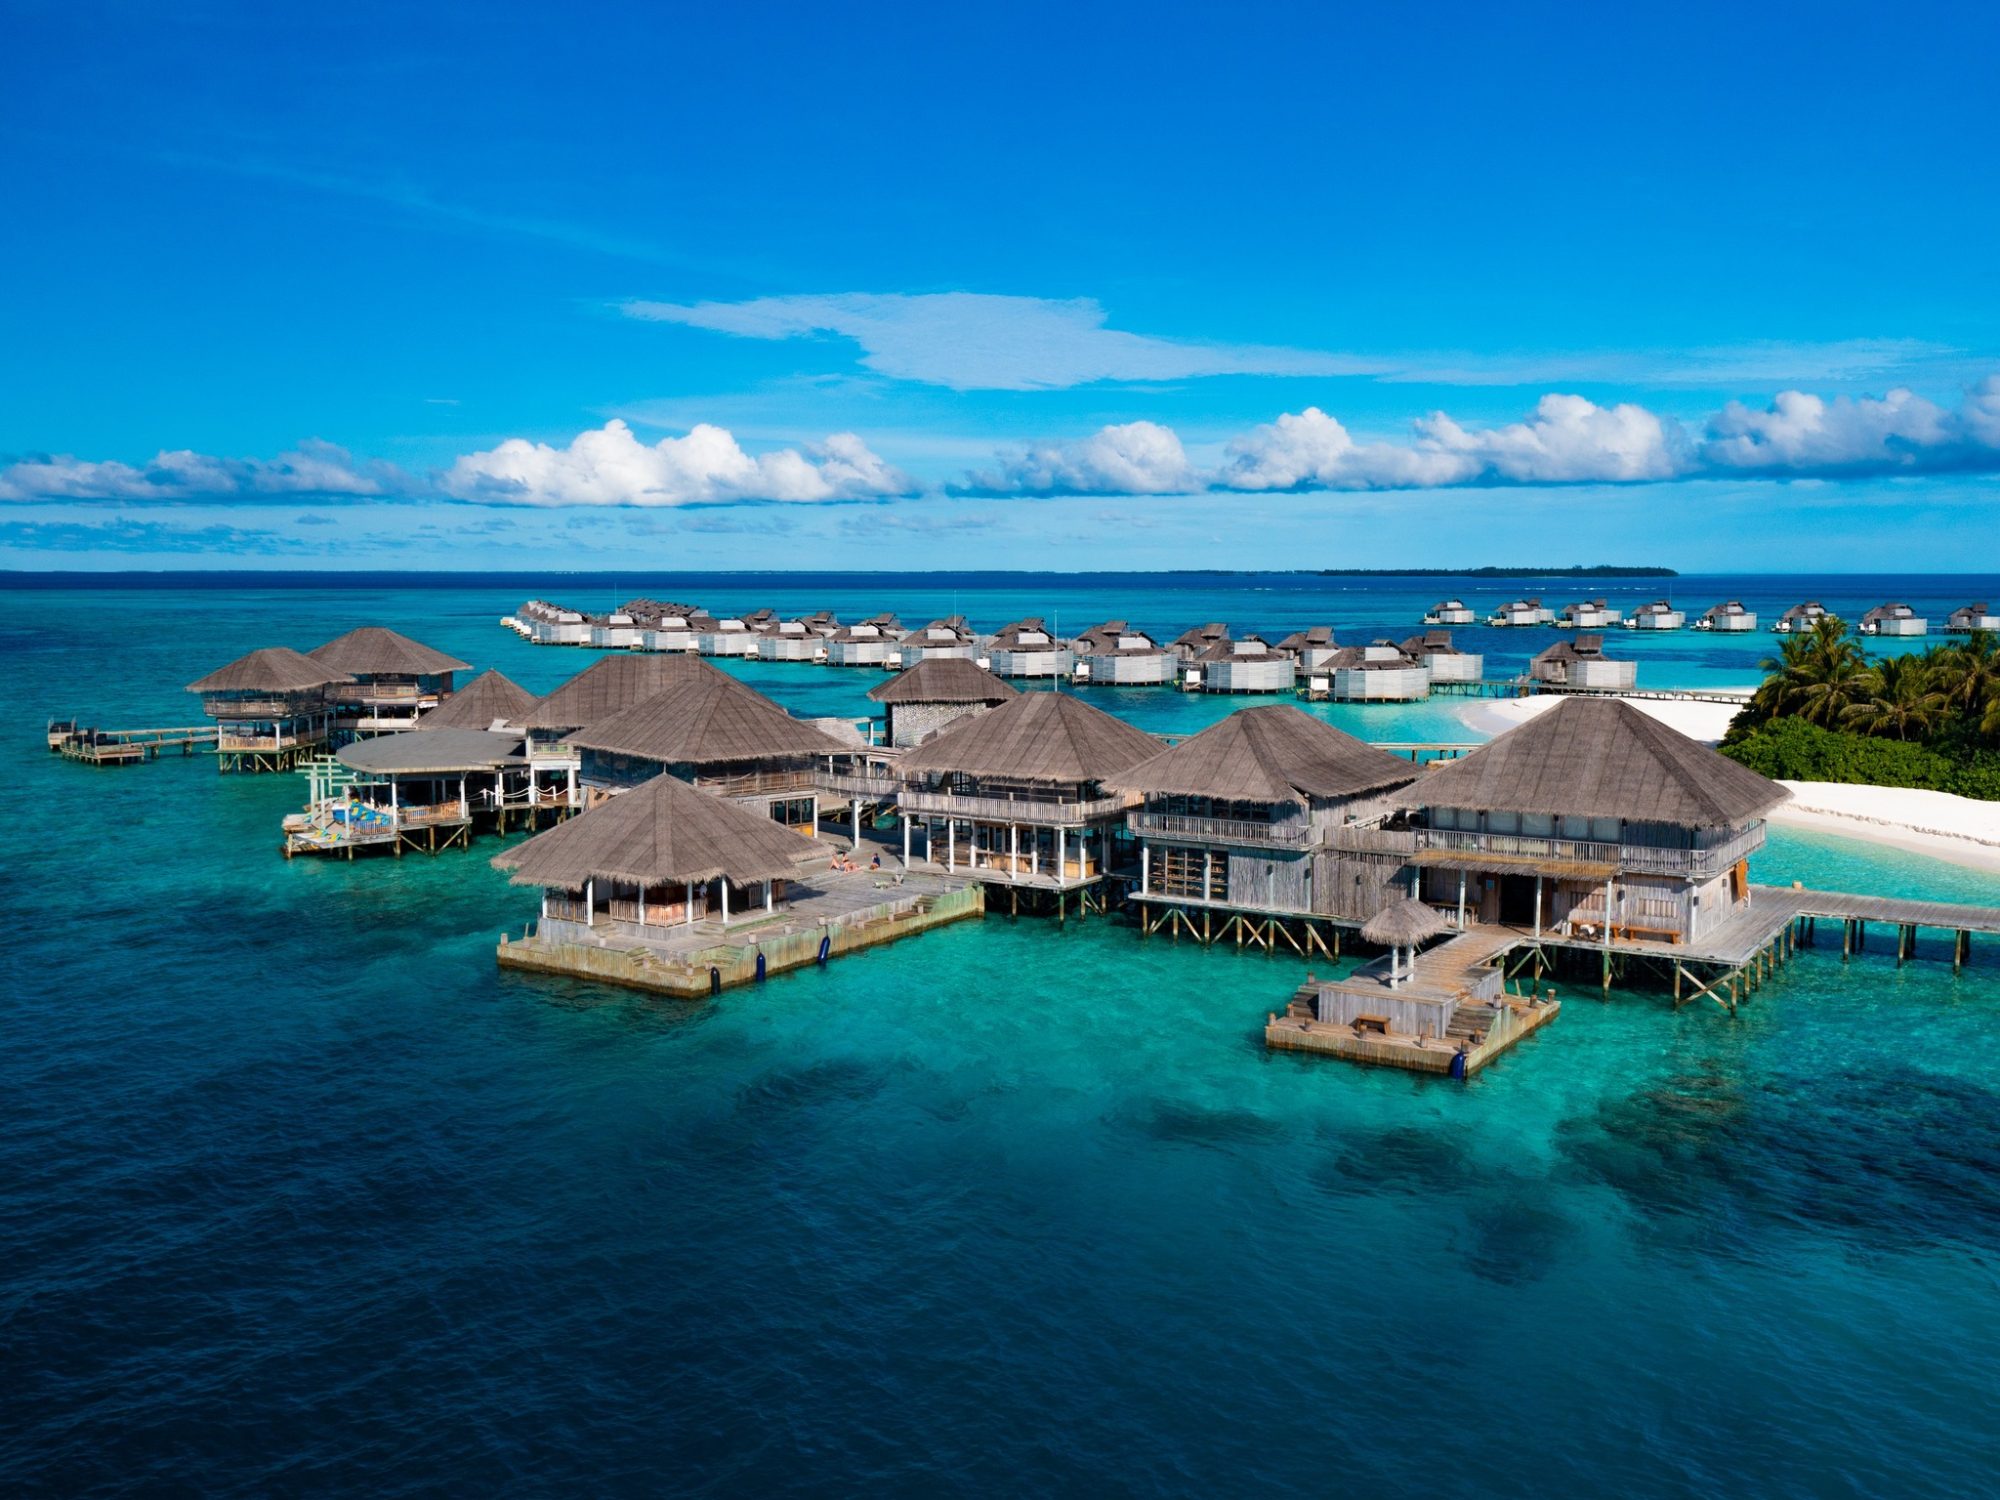 Six Senses Laamu: An atoll utopia where sumptuous meets sustainable